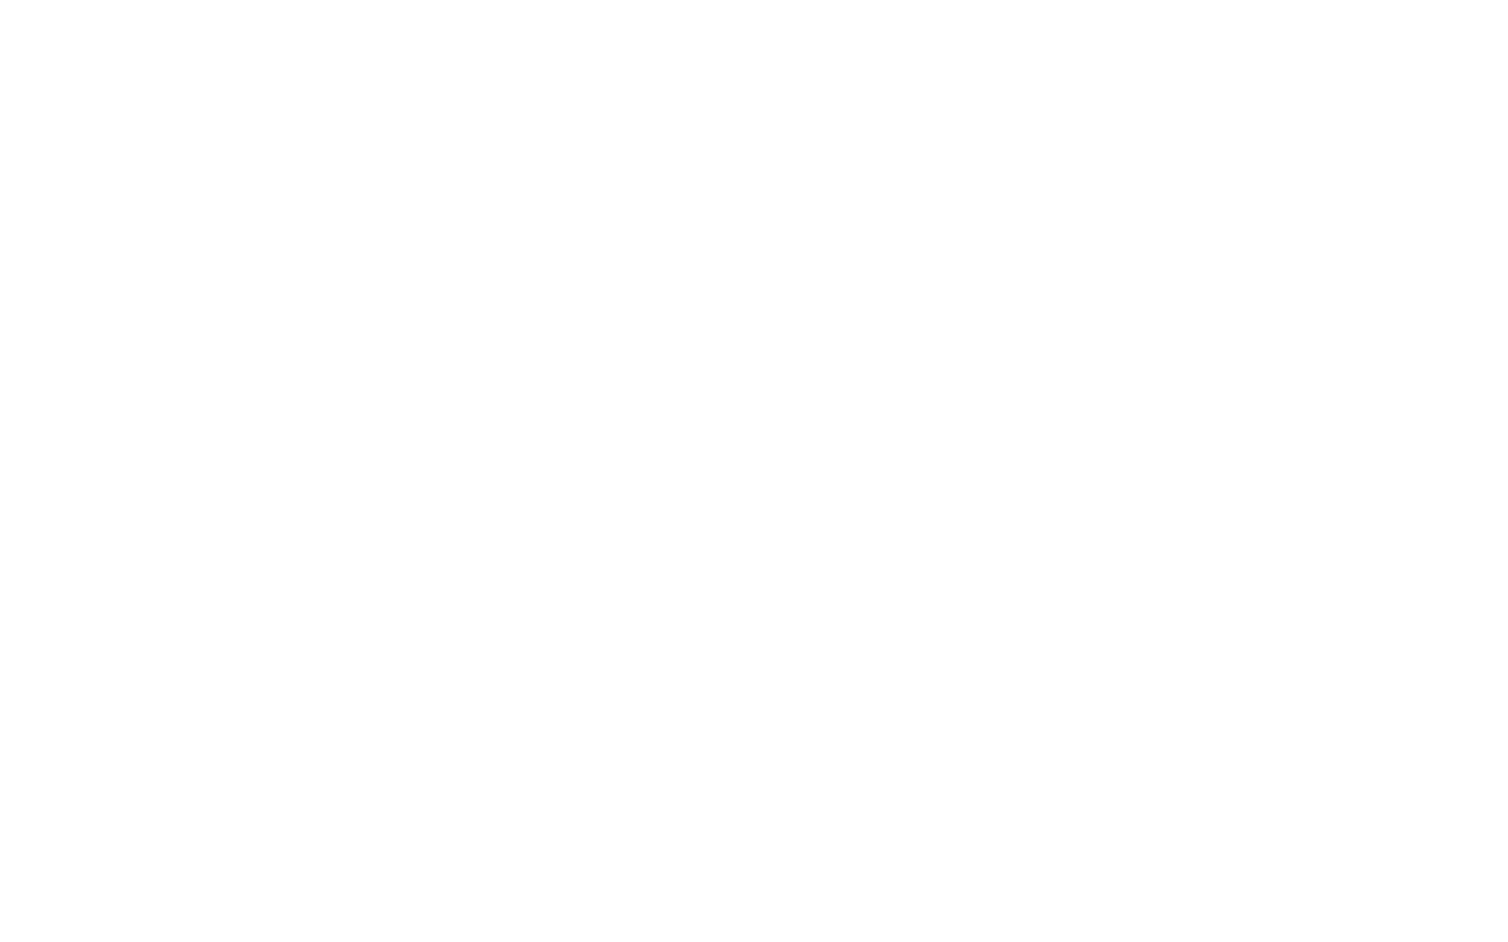 Michael Ivory Photography